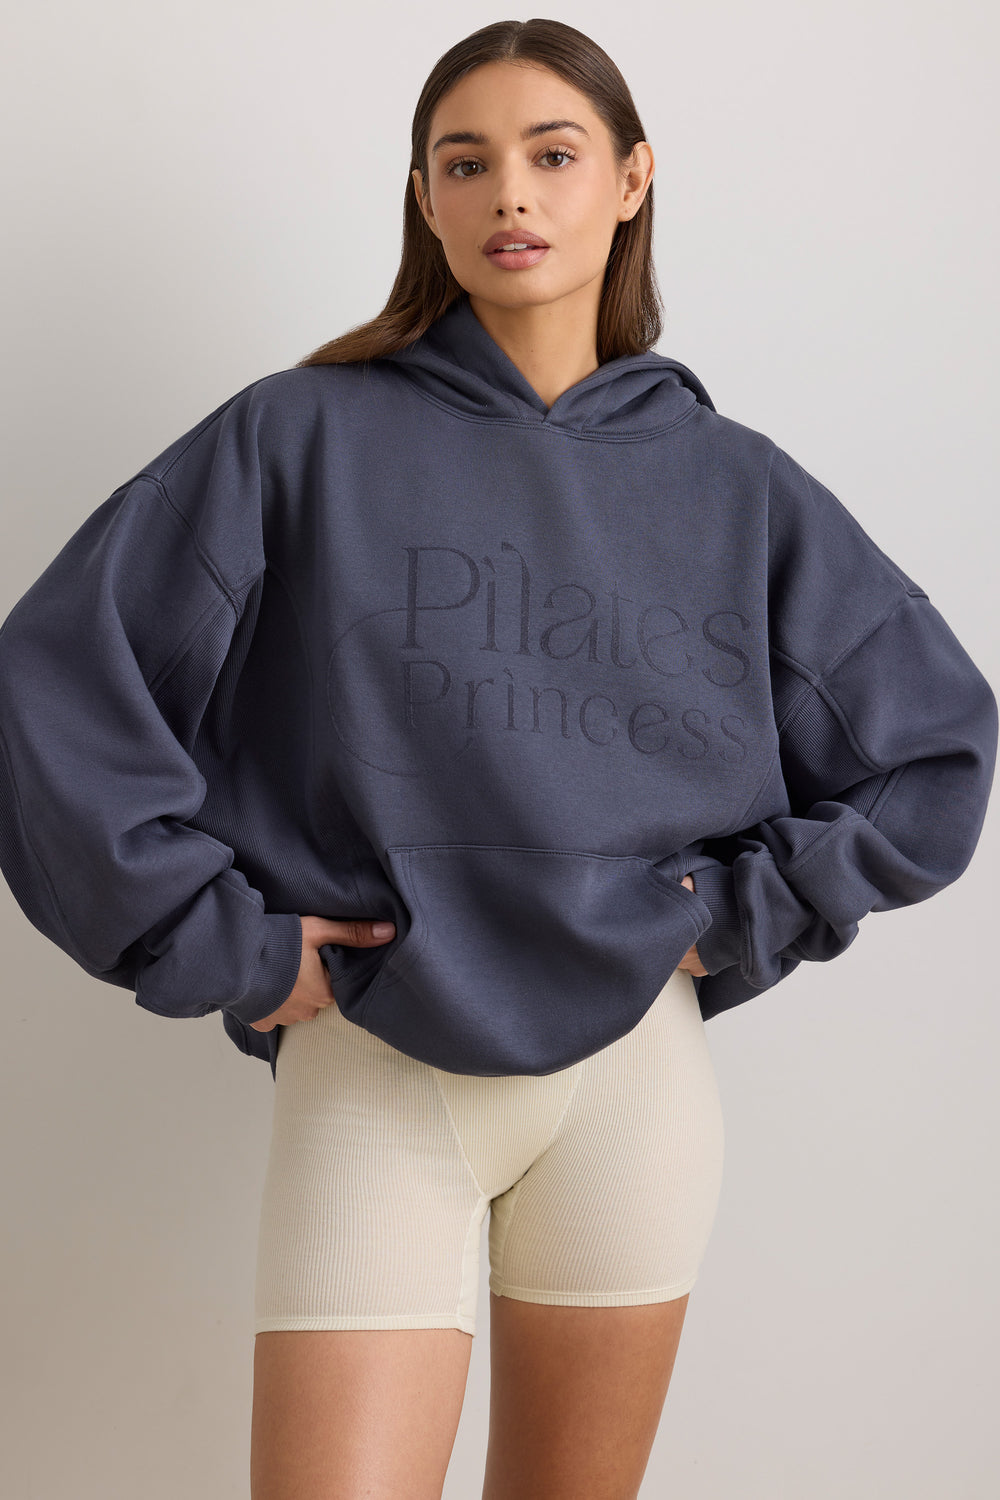 Pilates Princess Oversized Hooded Sweatshirt in Slate